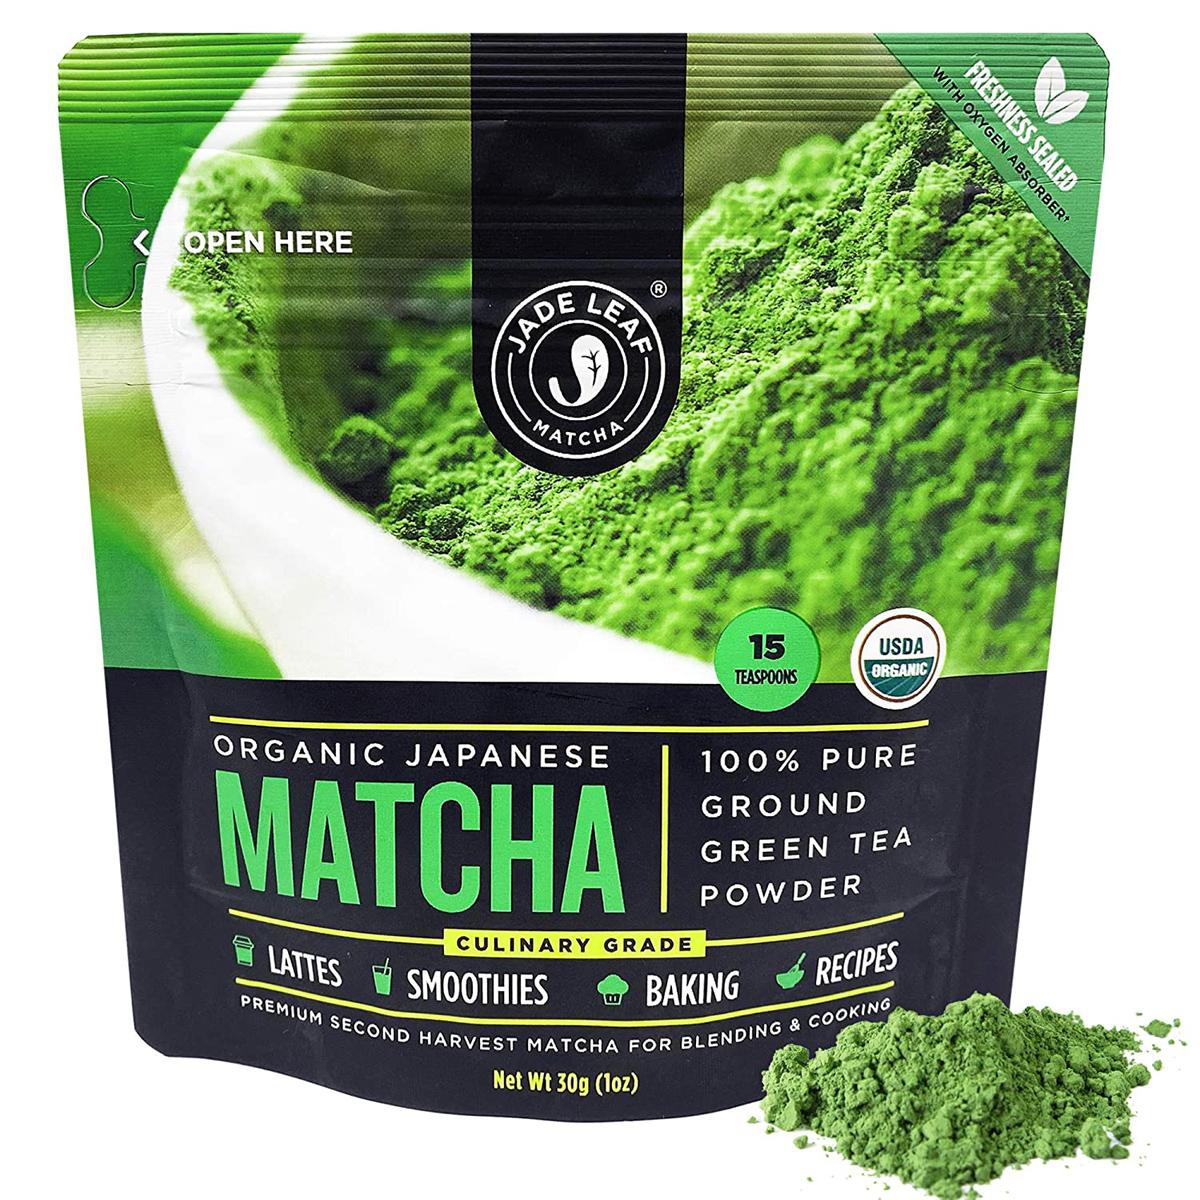 Jade Leaf Organic Matcha Green Tea Powder for $7.54 Shipped